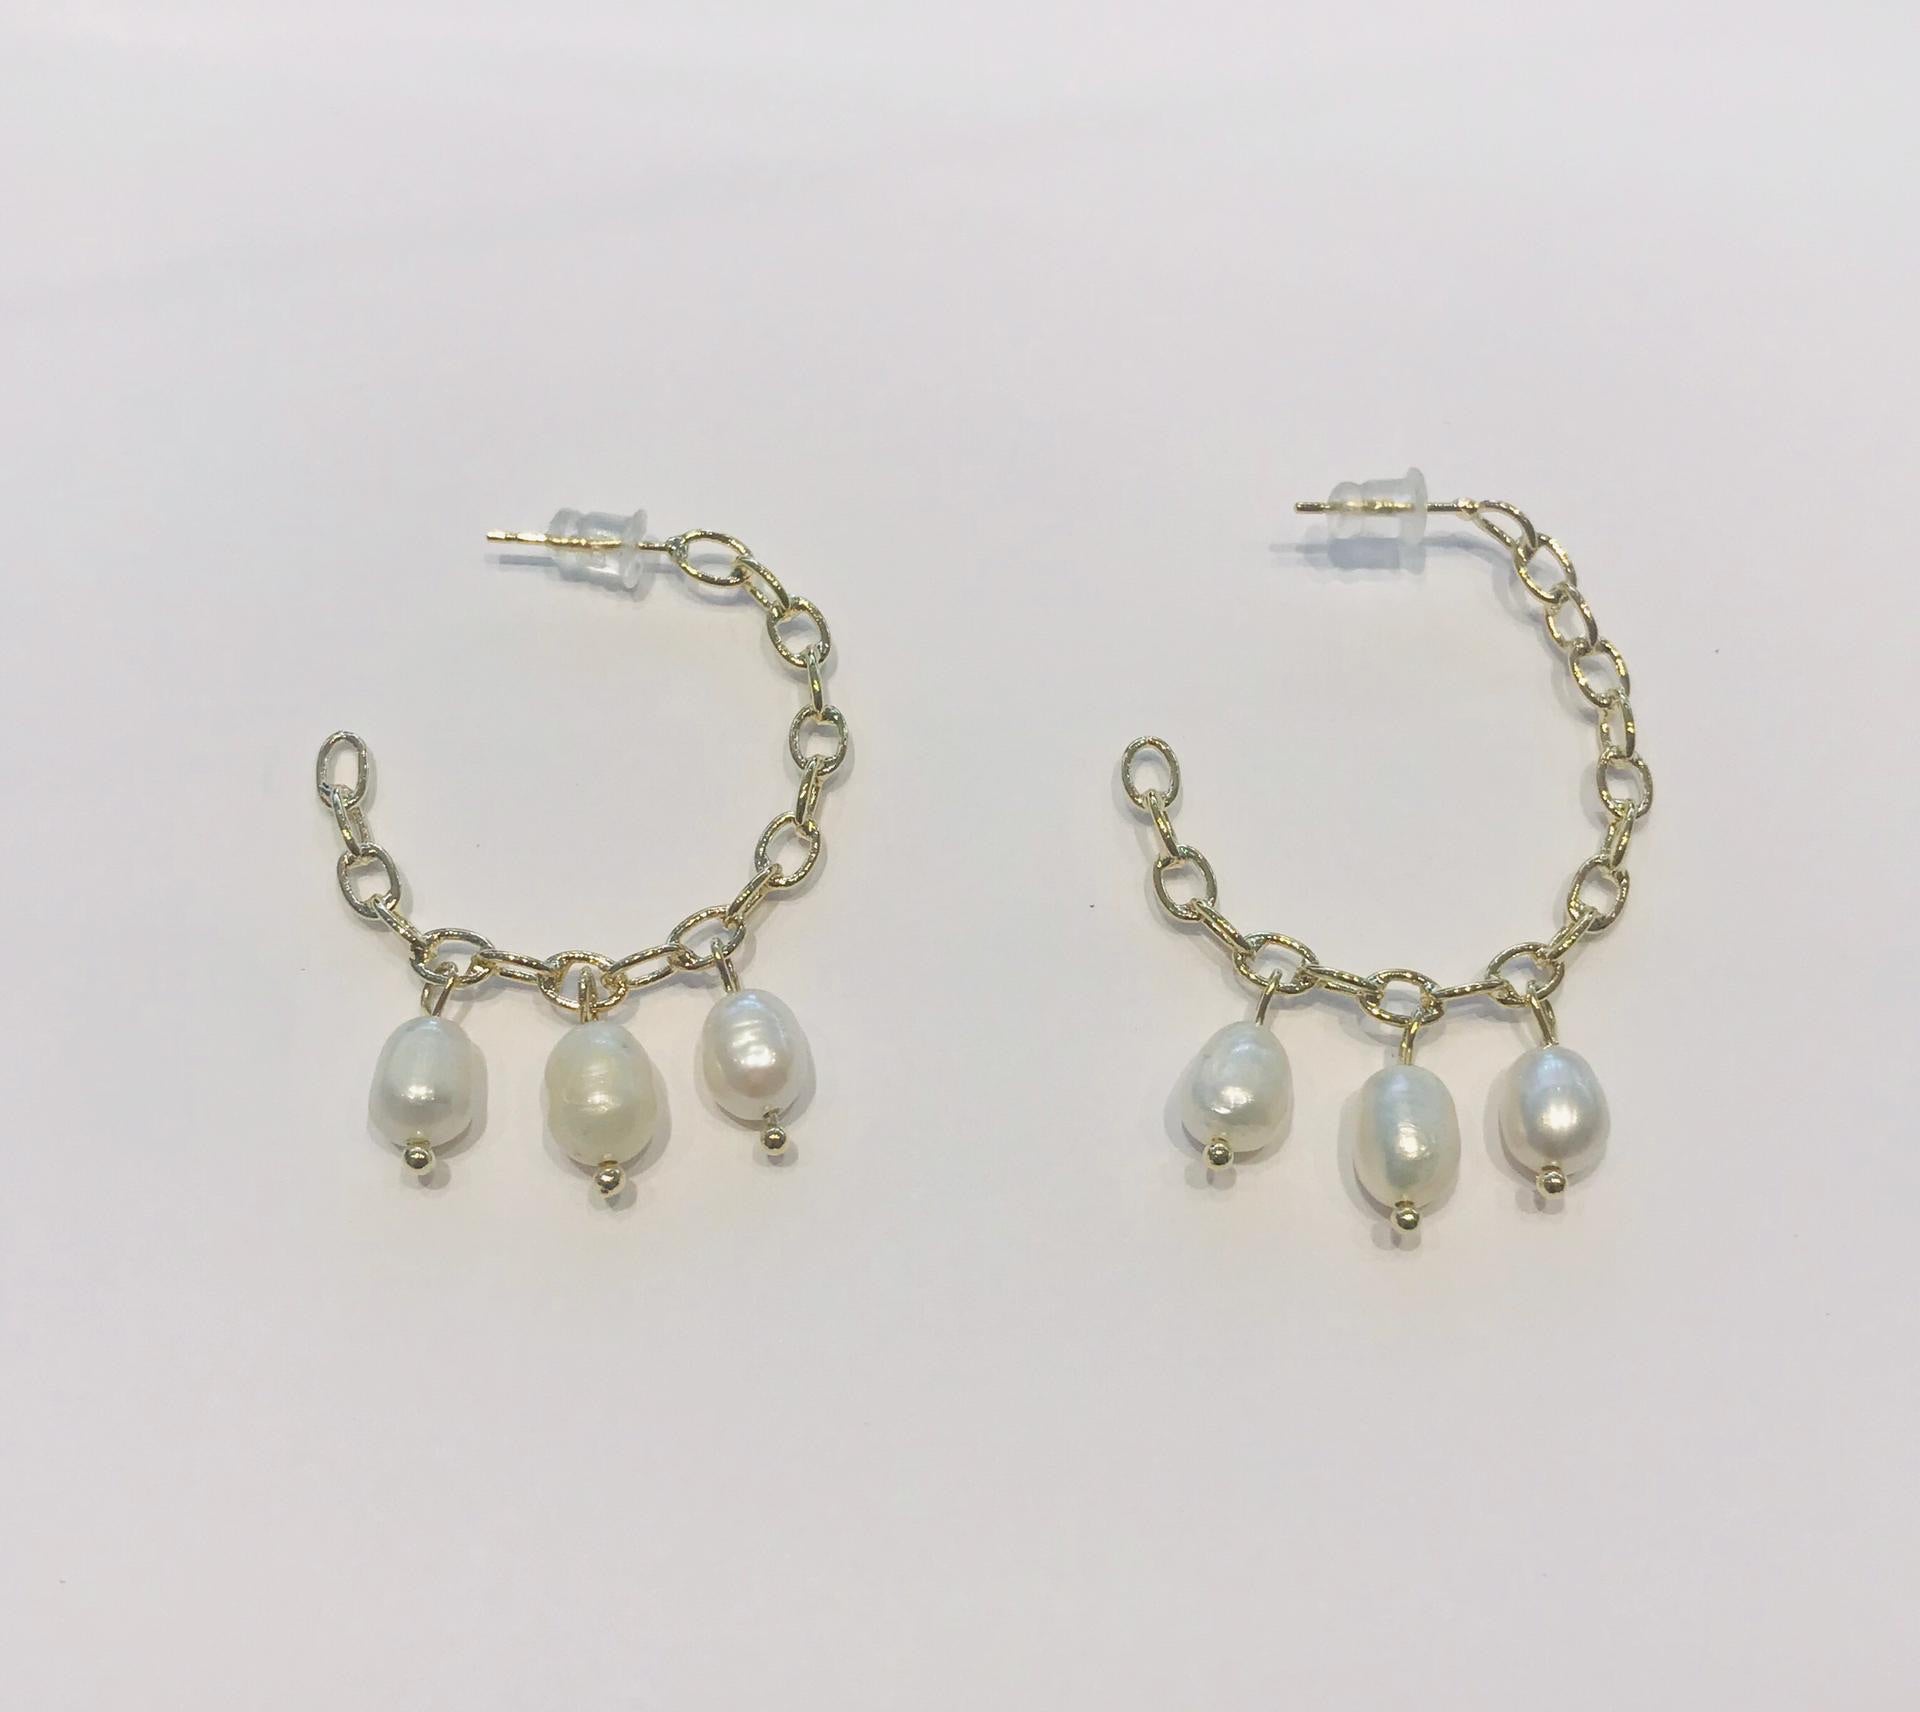 Earrings in steel with 3 freshwater pearls